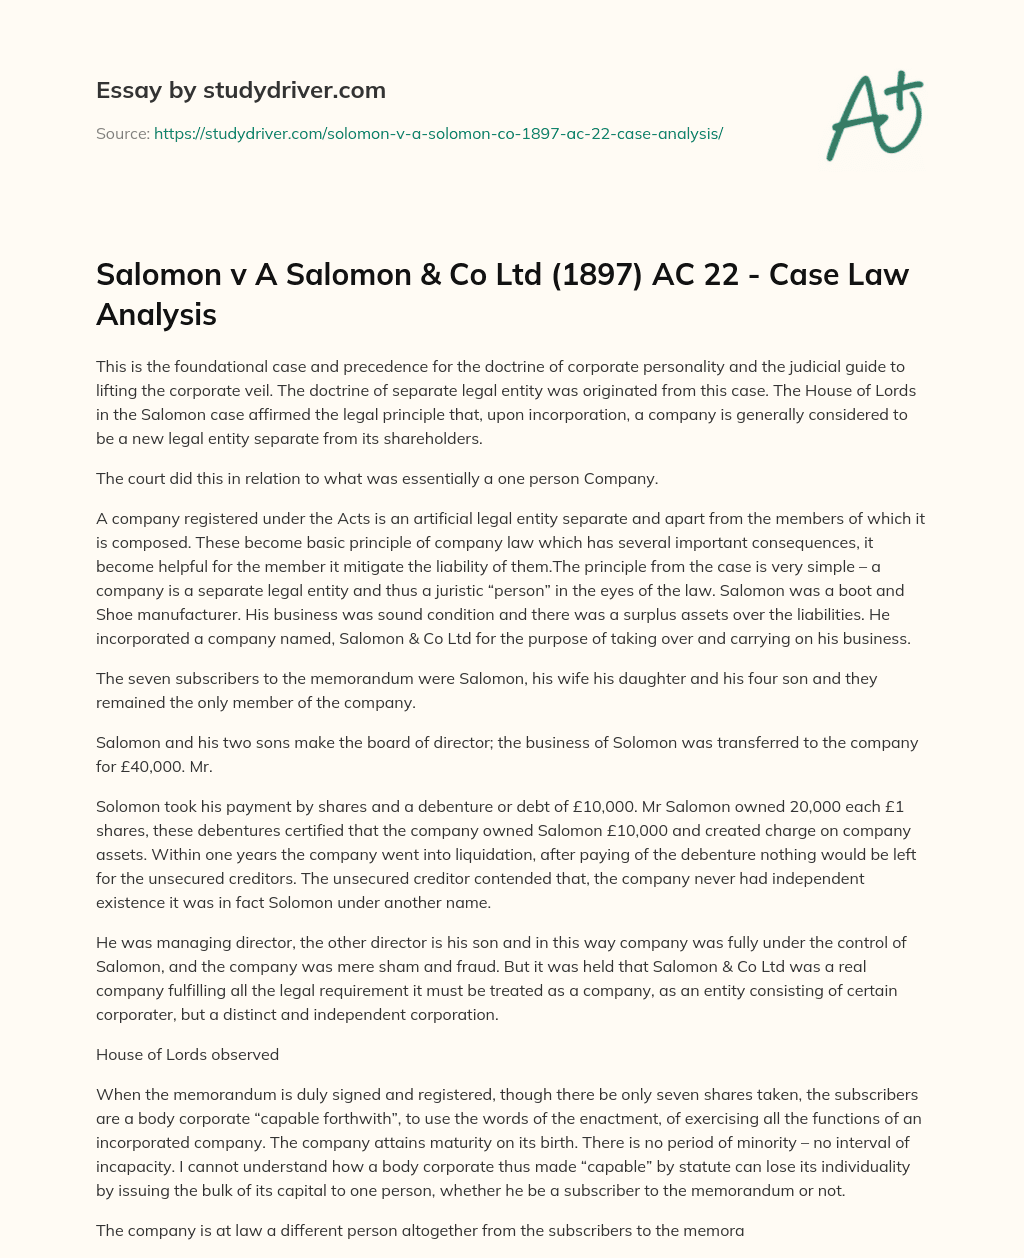 Salomon V a Salomon & Co Ltd (1897) AC 22 – Case Law Analysis essay